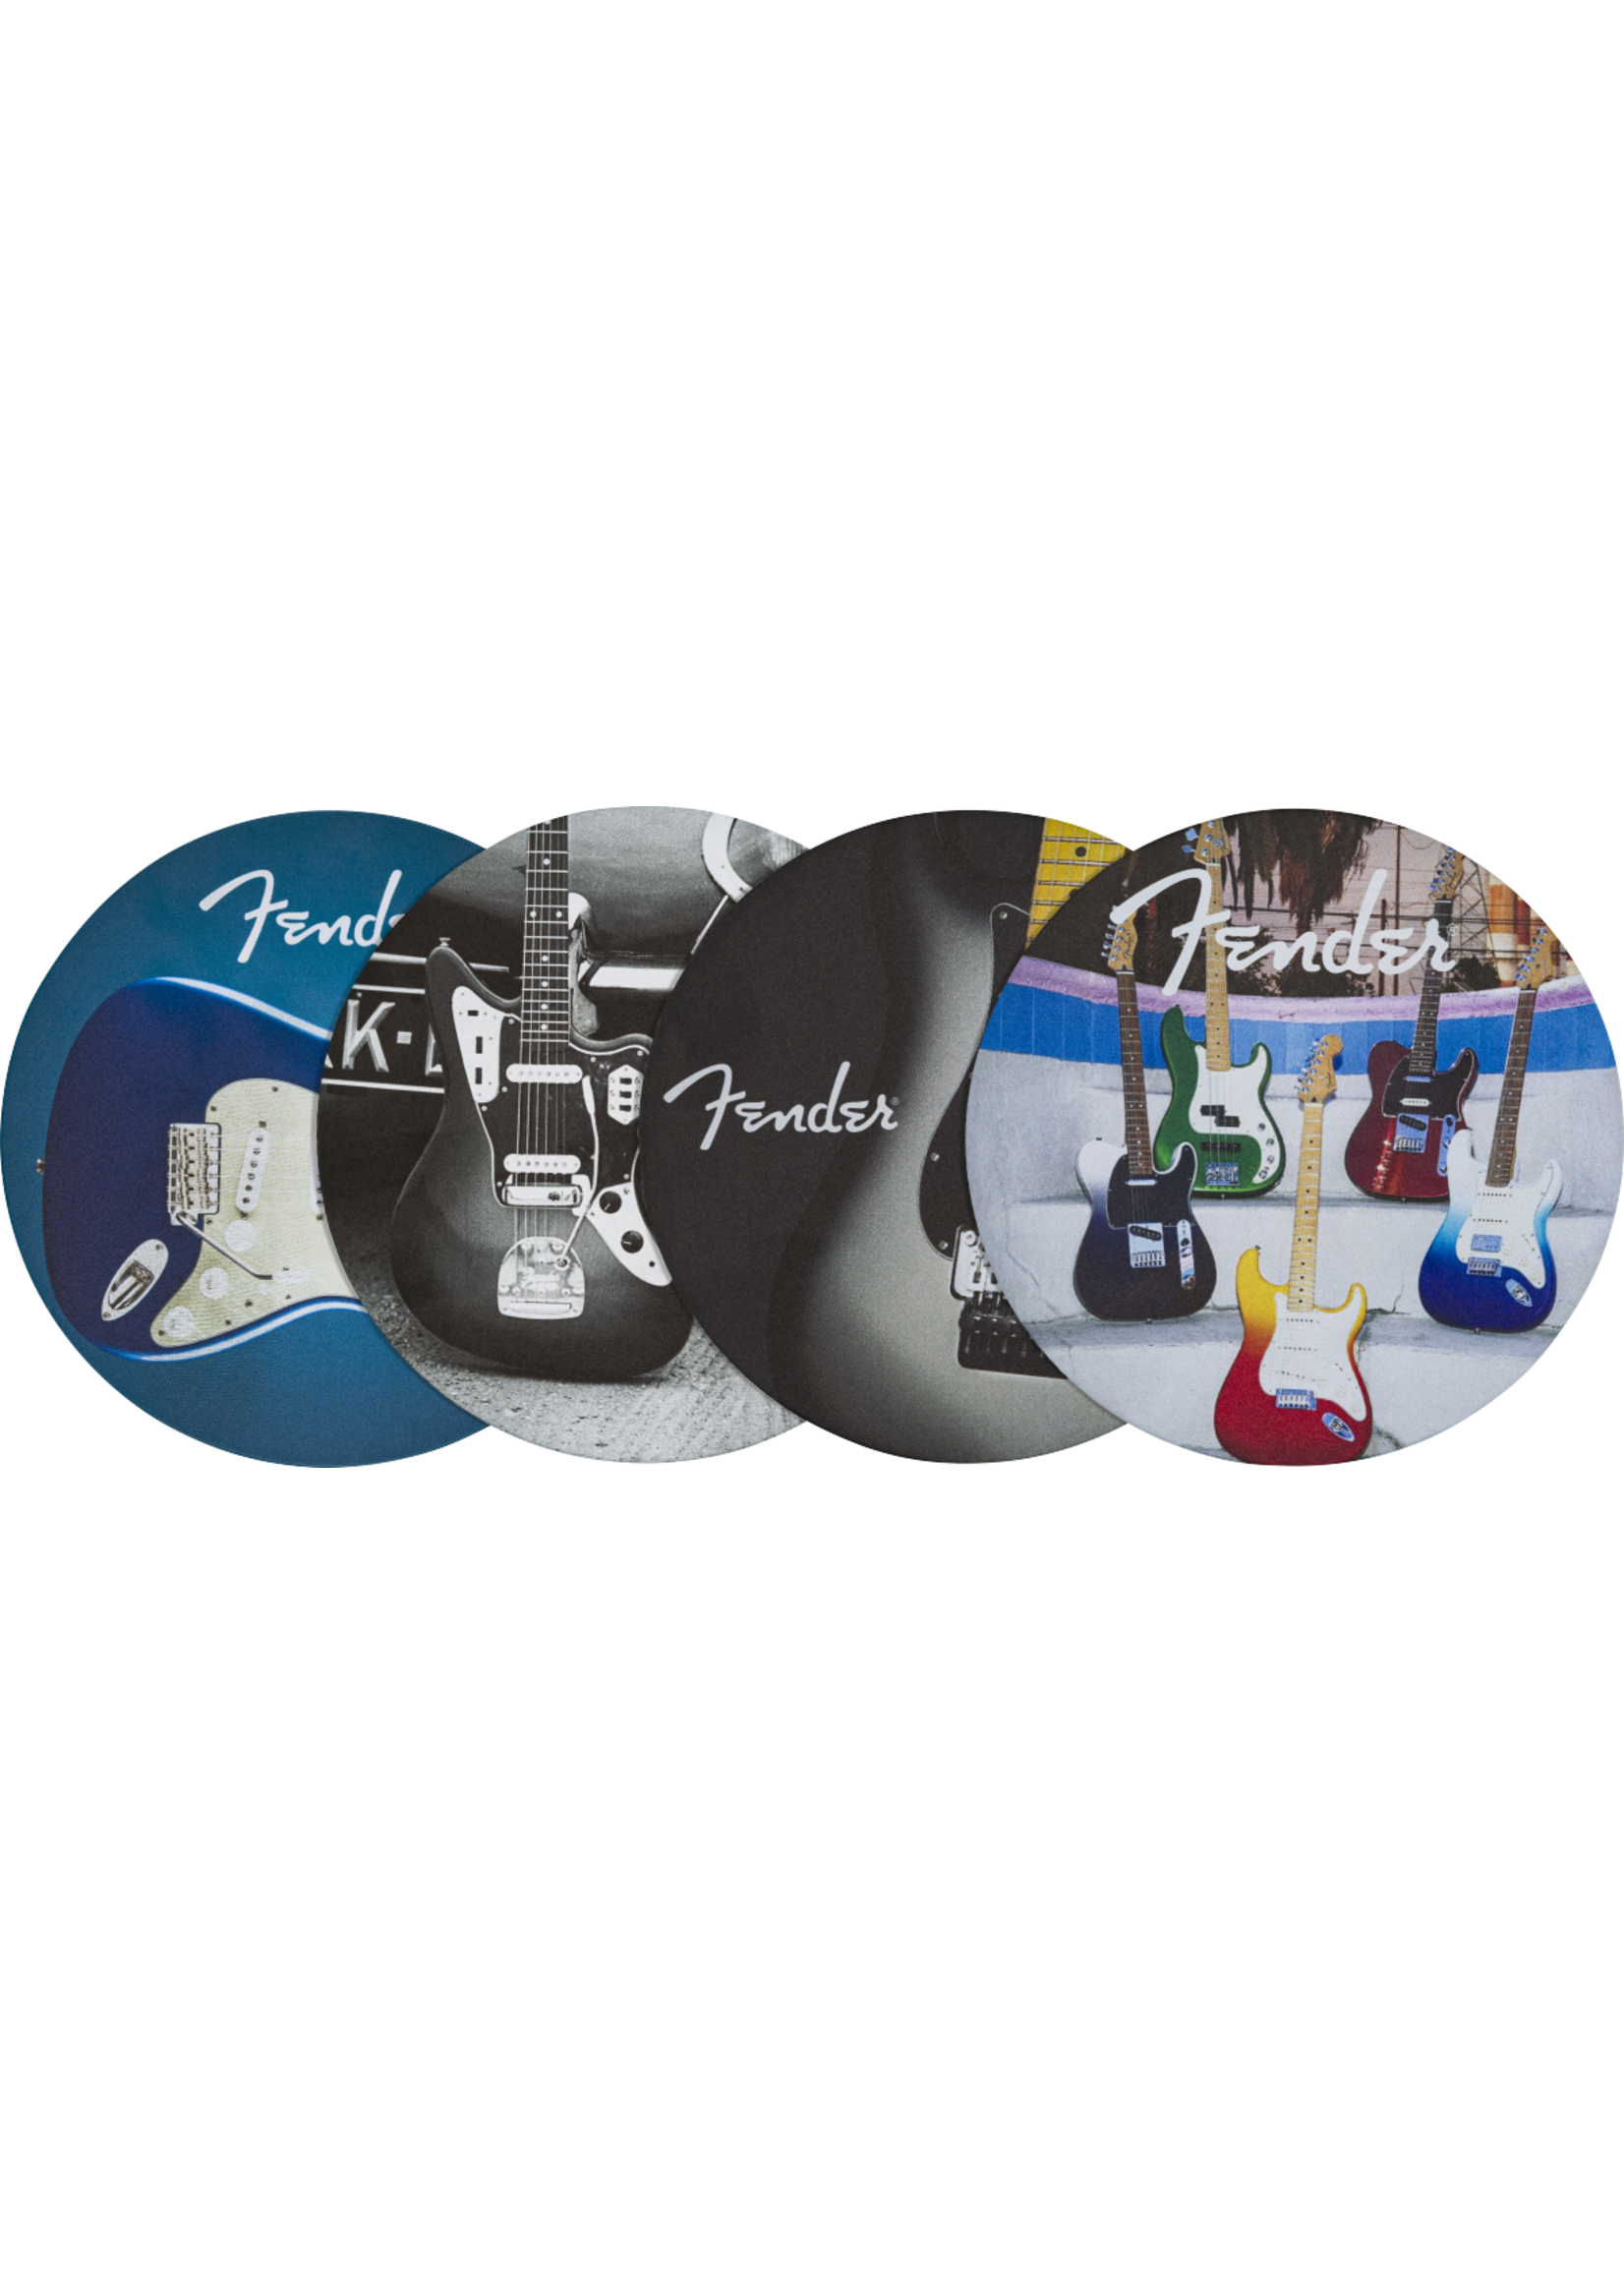 Fender Fender Guitars Coasters 4-Pack Multi-Colour Leather